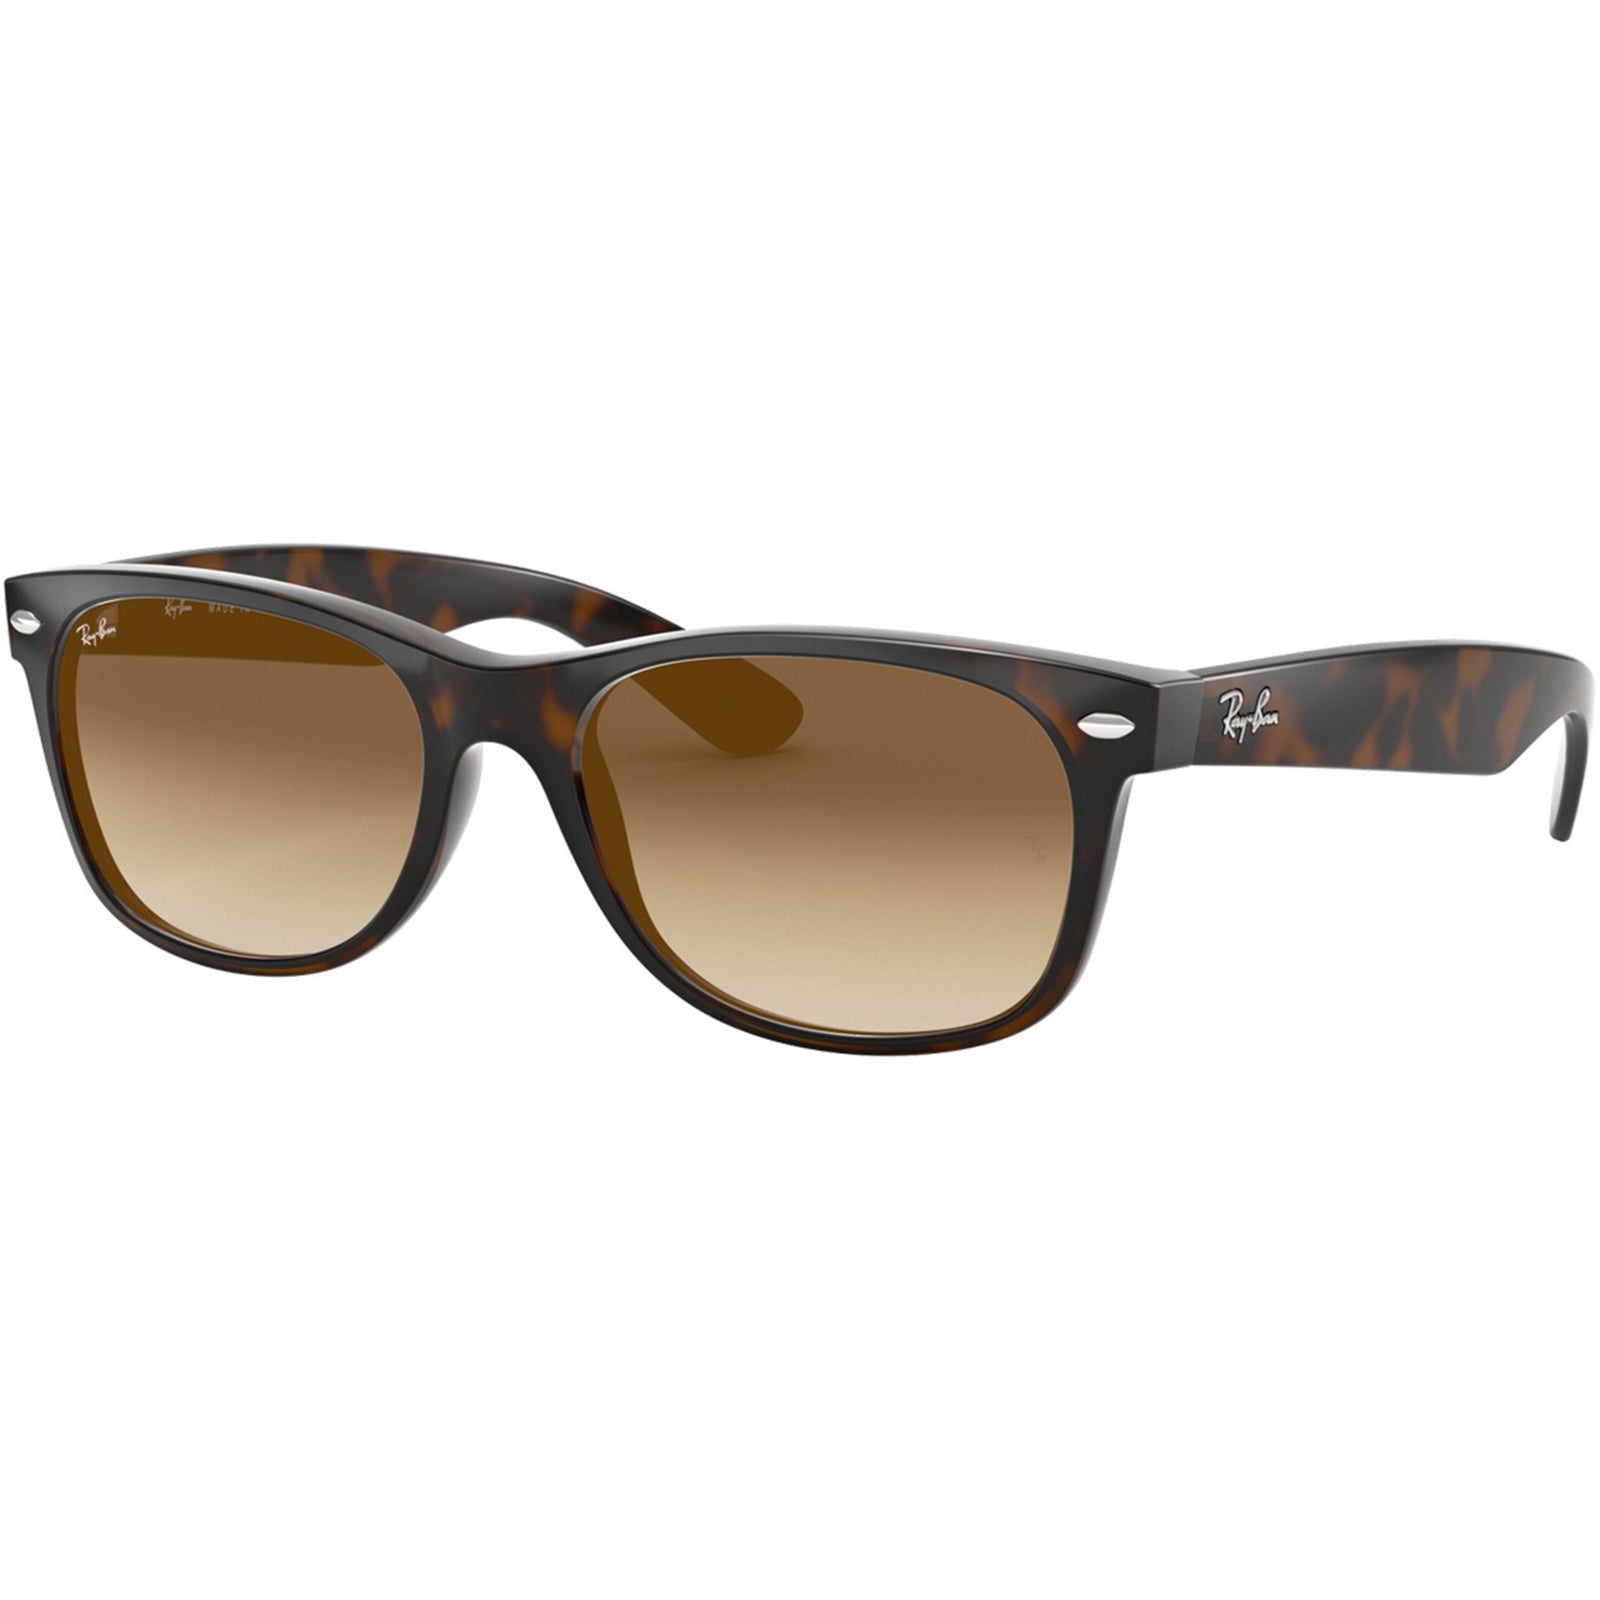 Ray-Ban New Wayfarer Classic Adult Lifestyle Sunglasses-0RB2132